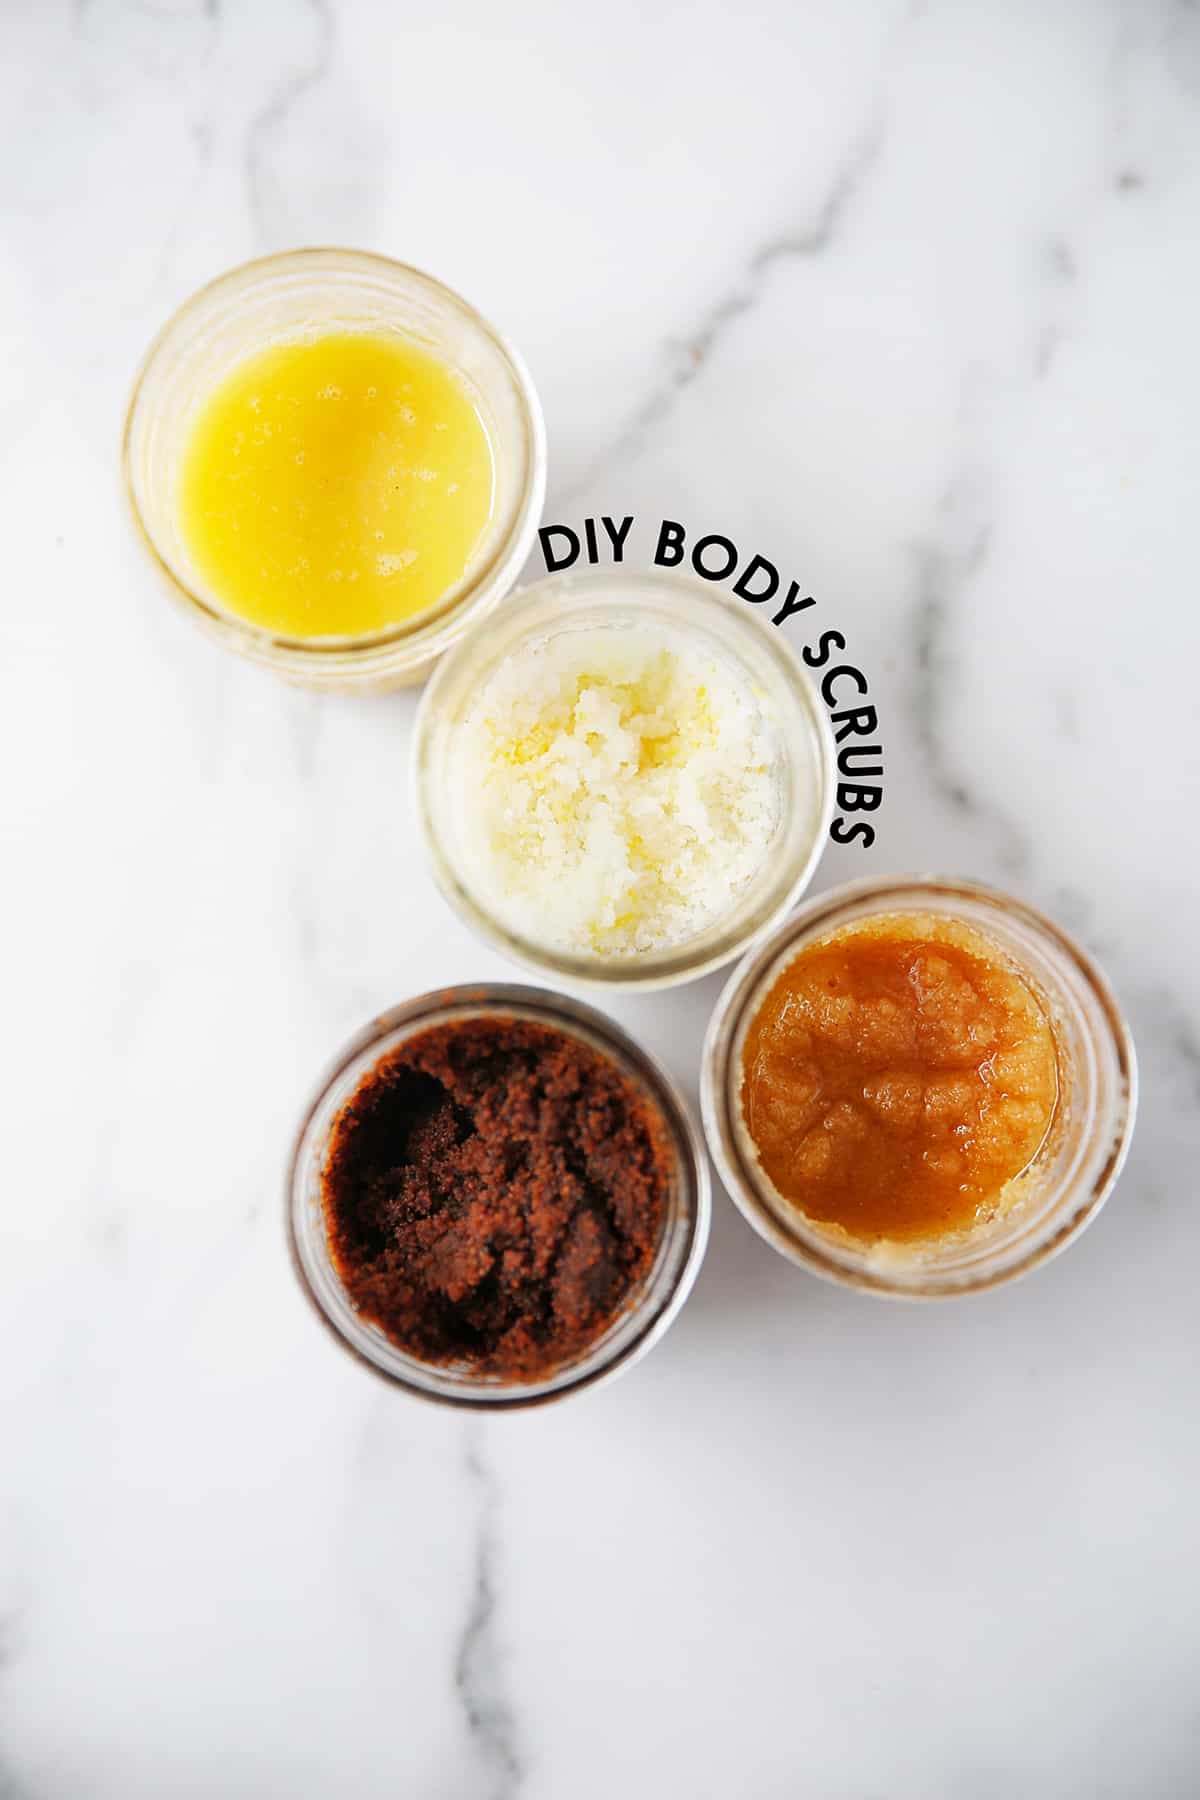 How to Make Body Scrub (& Why You Should Exfoliate!)